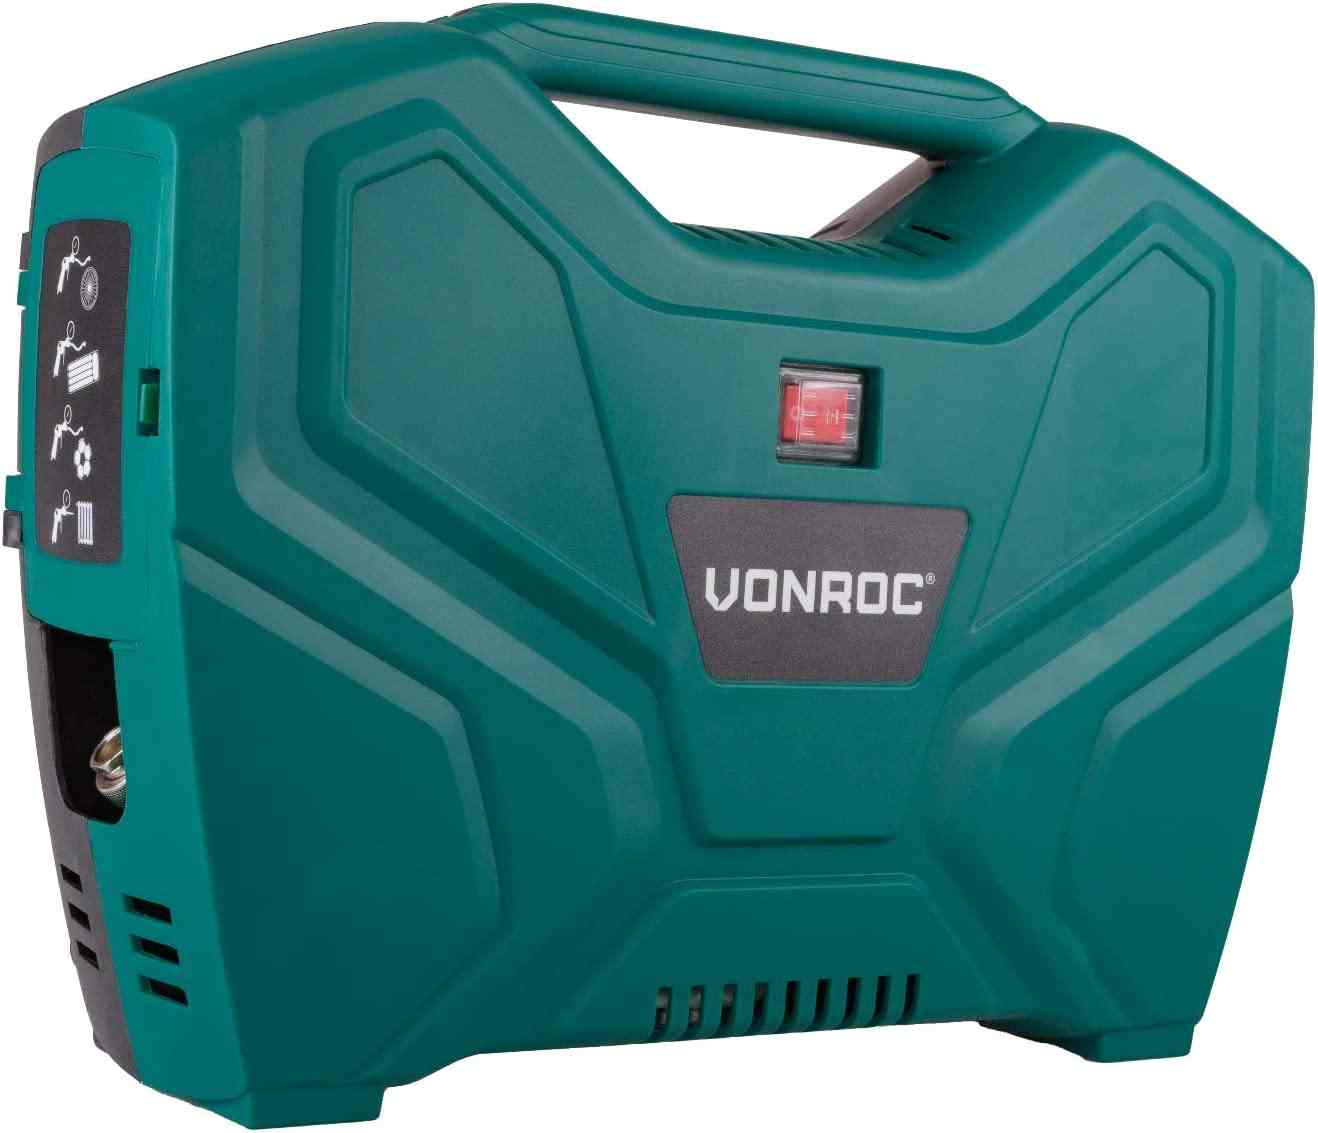 VONROC Portable Compressor 1100W - 8 Bar